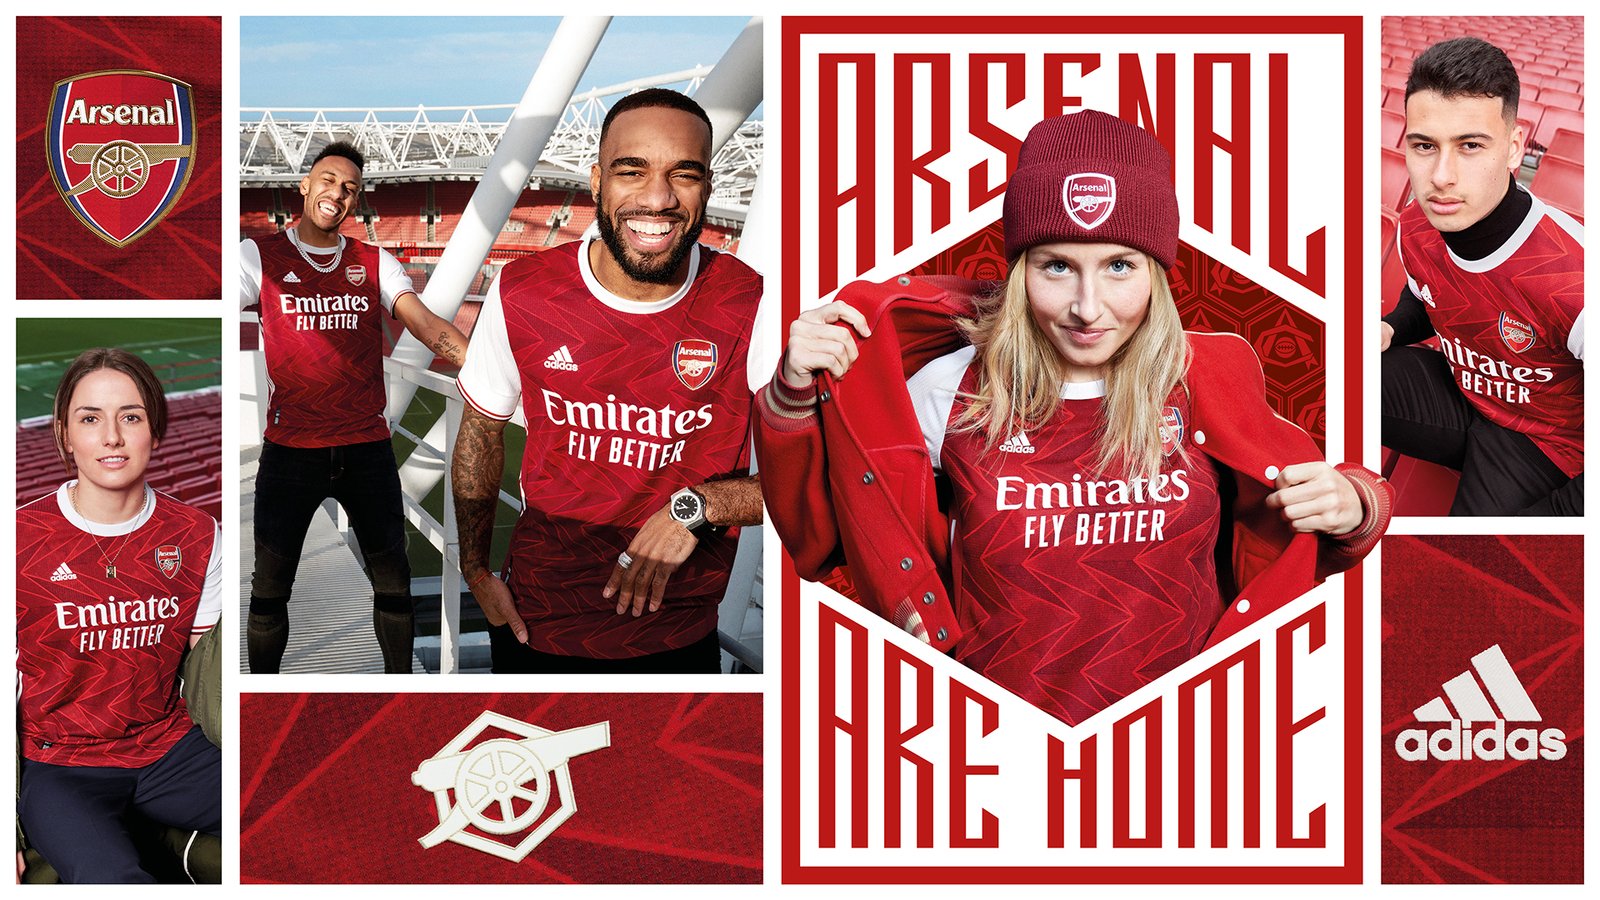 The new adidas x Arsenal home kit 